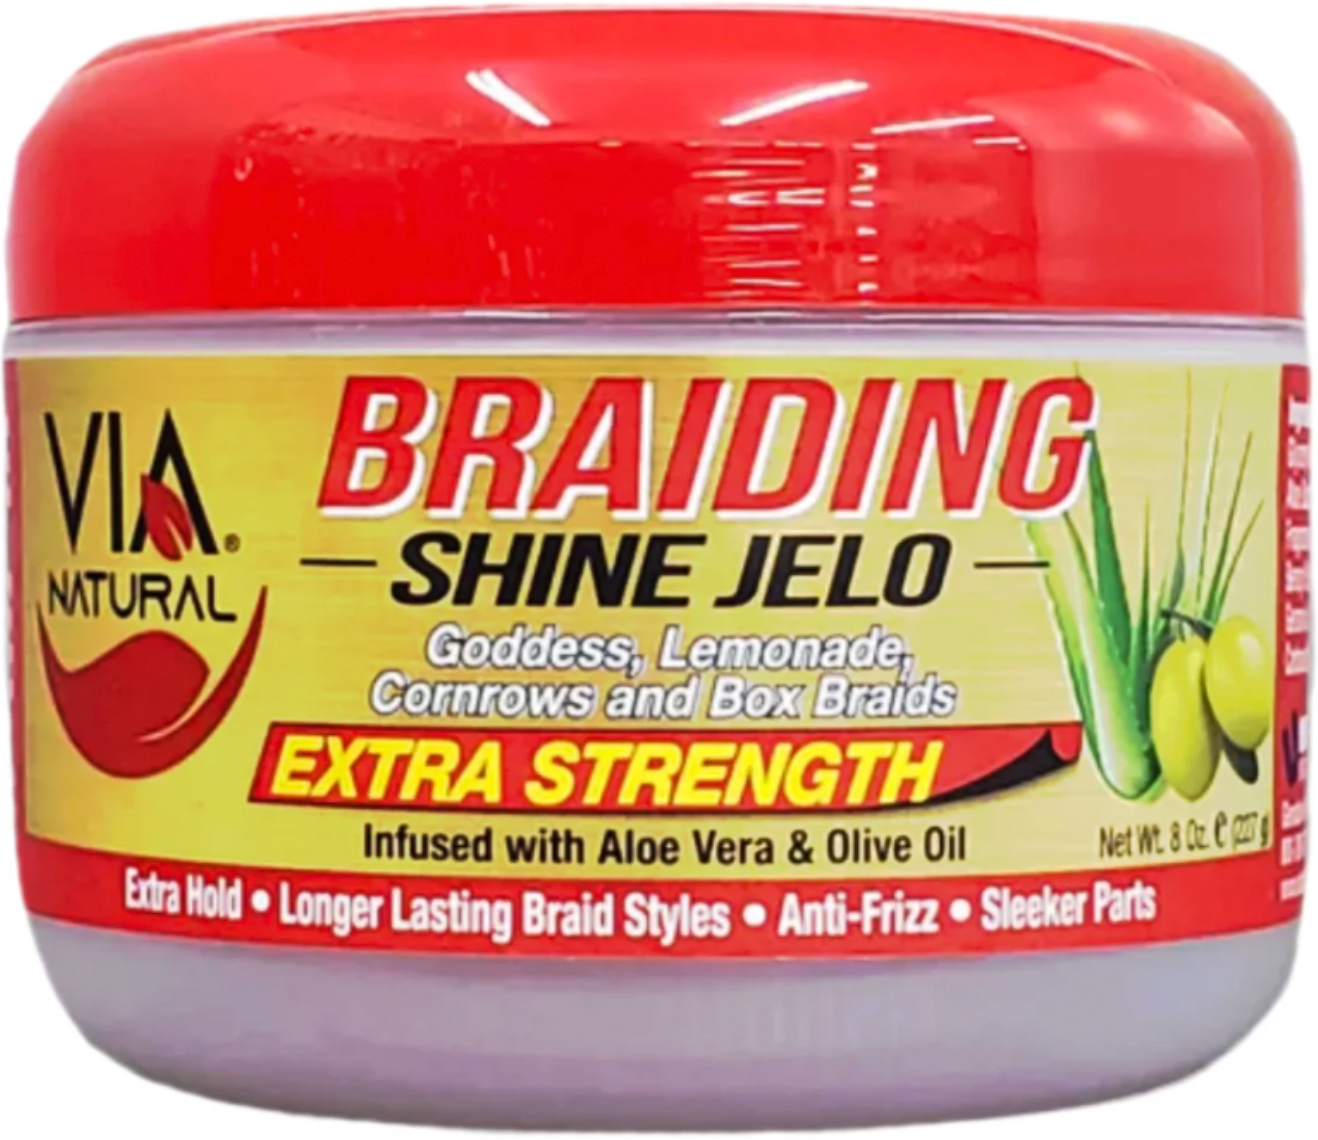 Via Naturals - Breading Shine Jelo Extra 8.oz